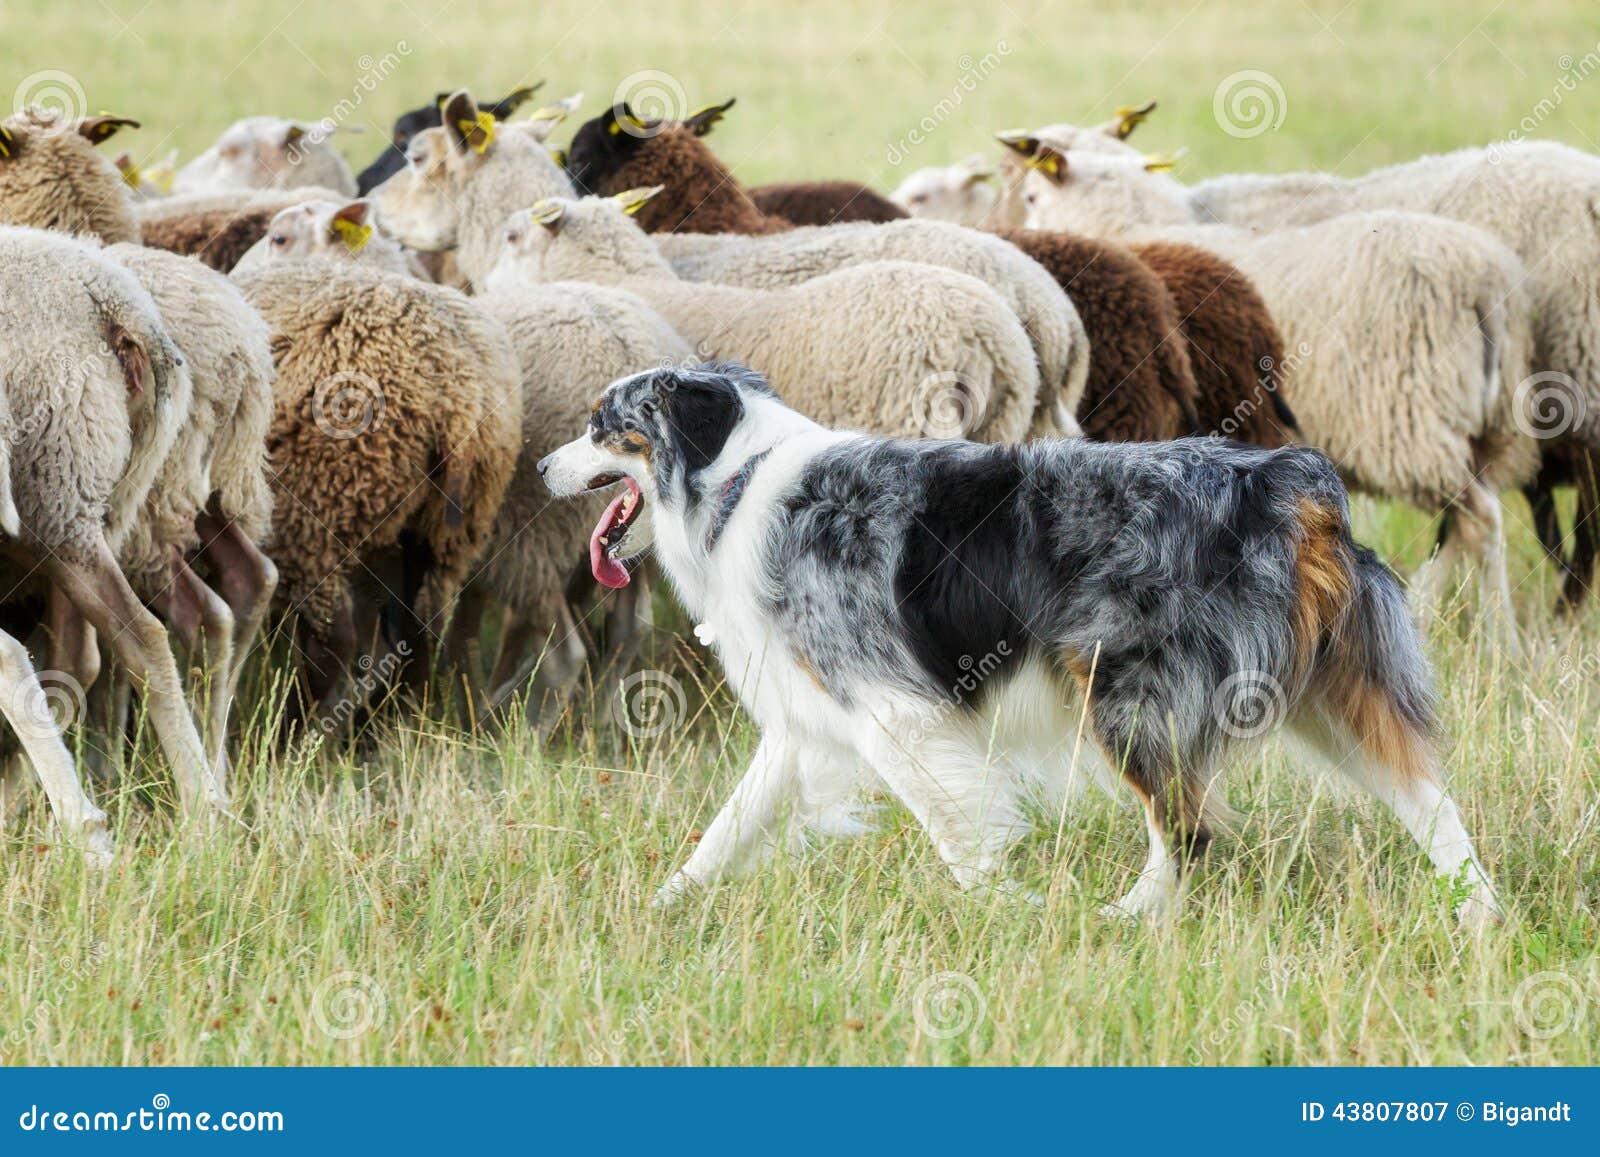 border collie dog herding a flock of sheep